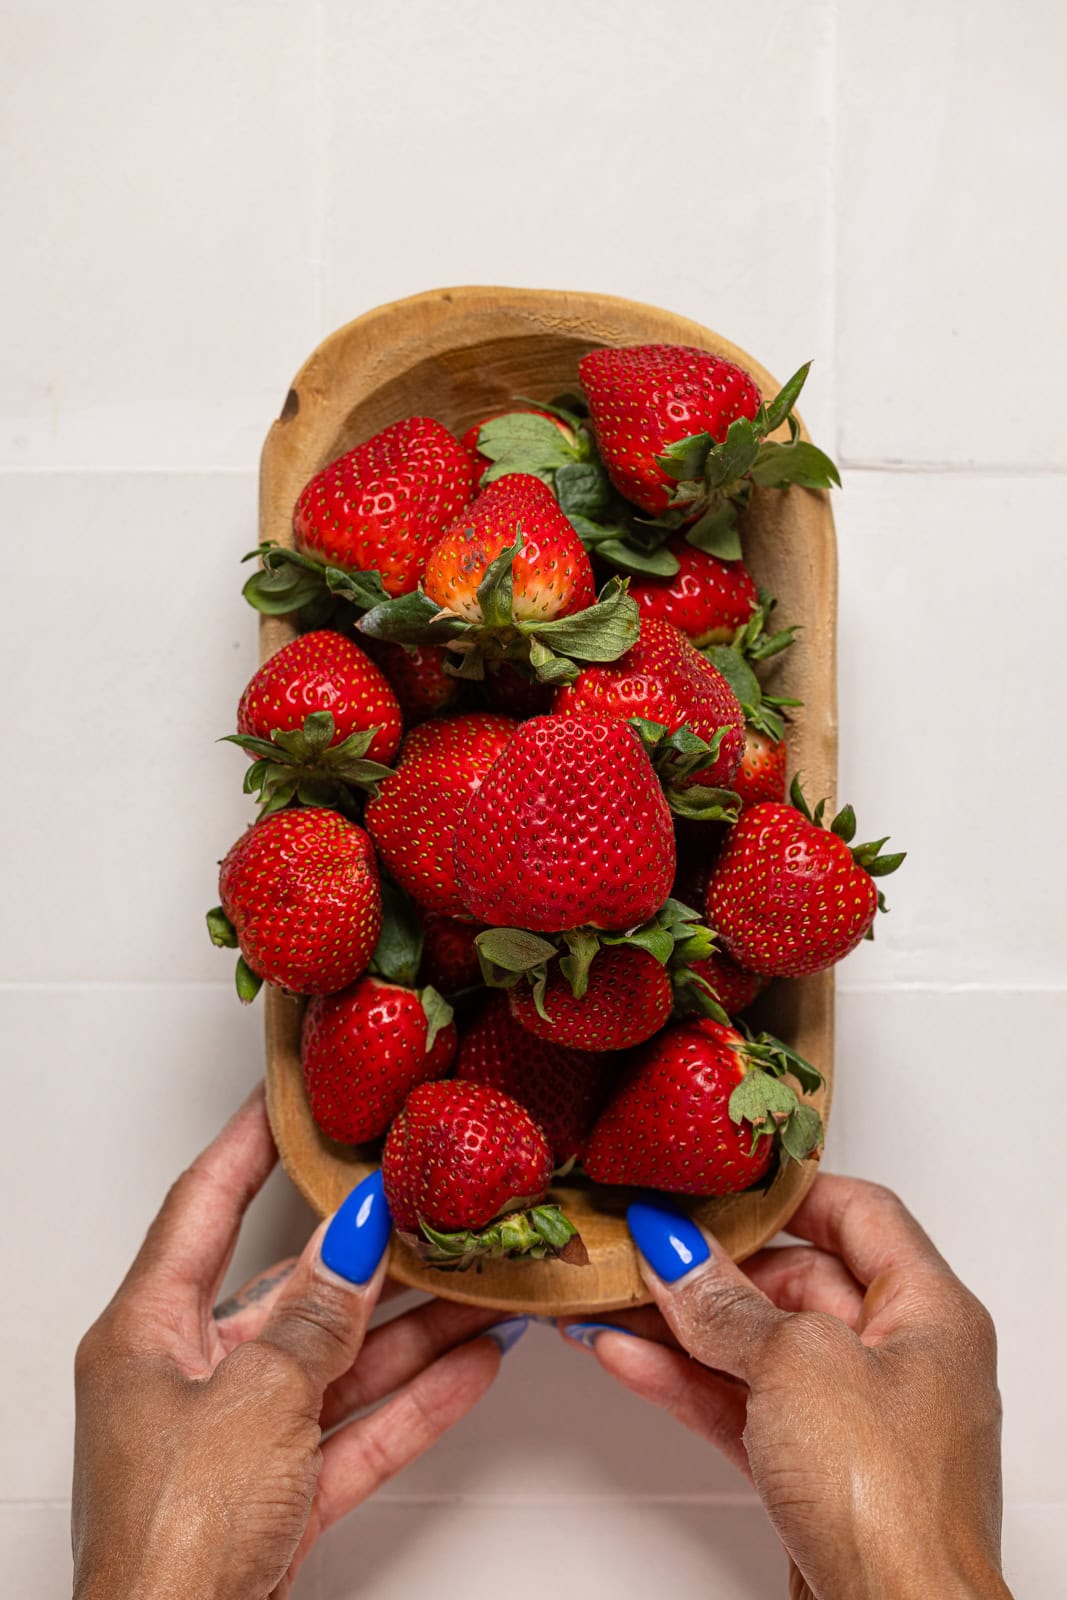 Wooden bowl full of strawberries being held.